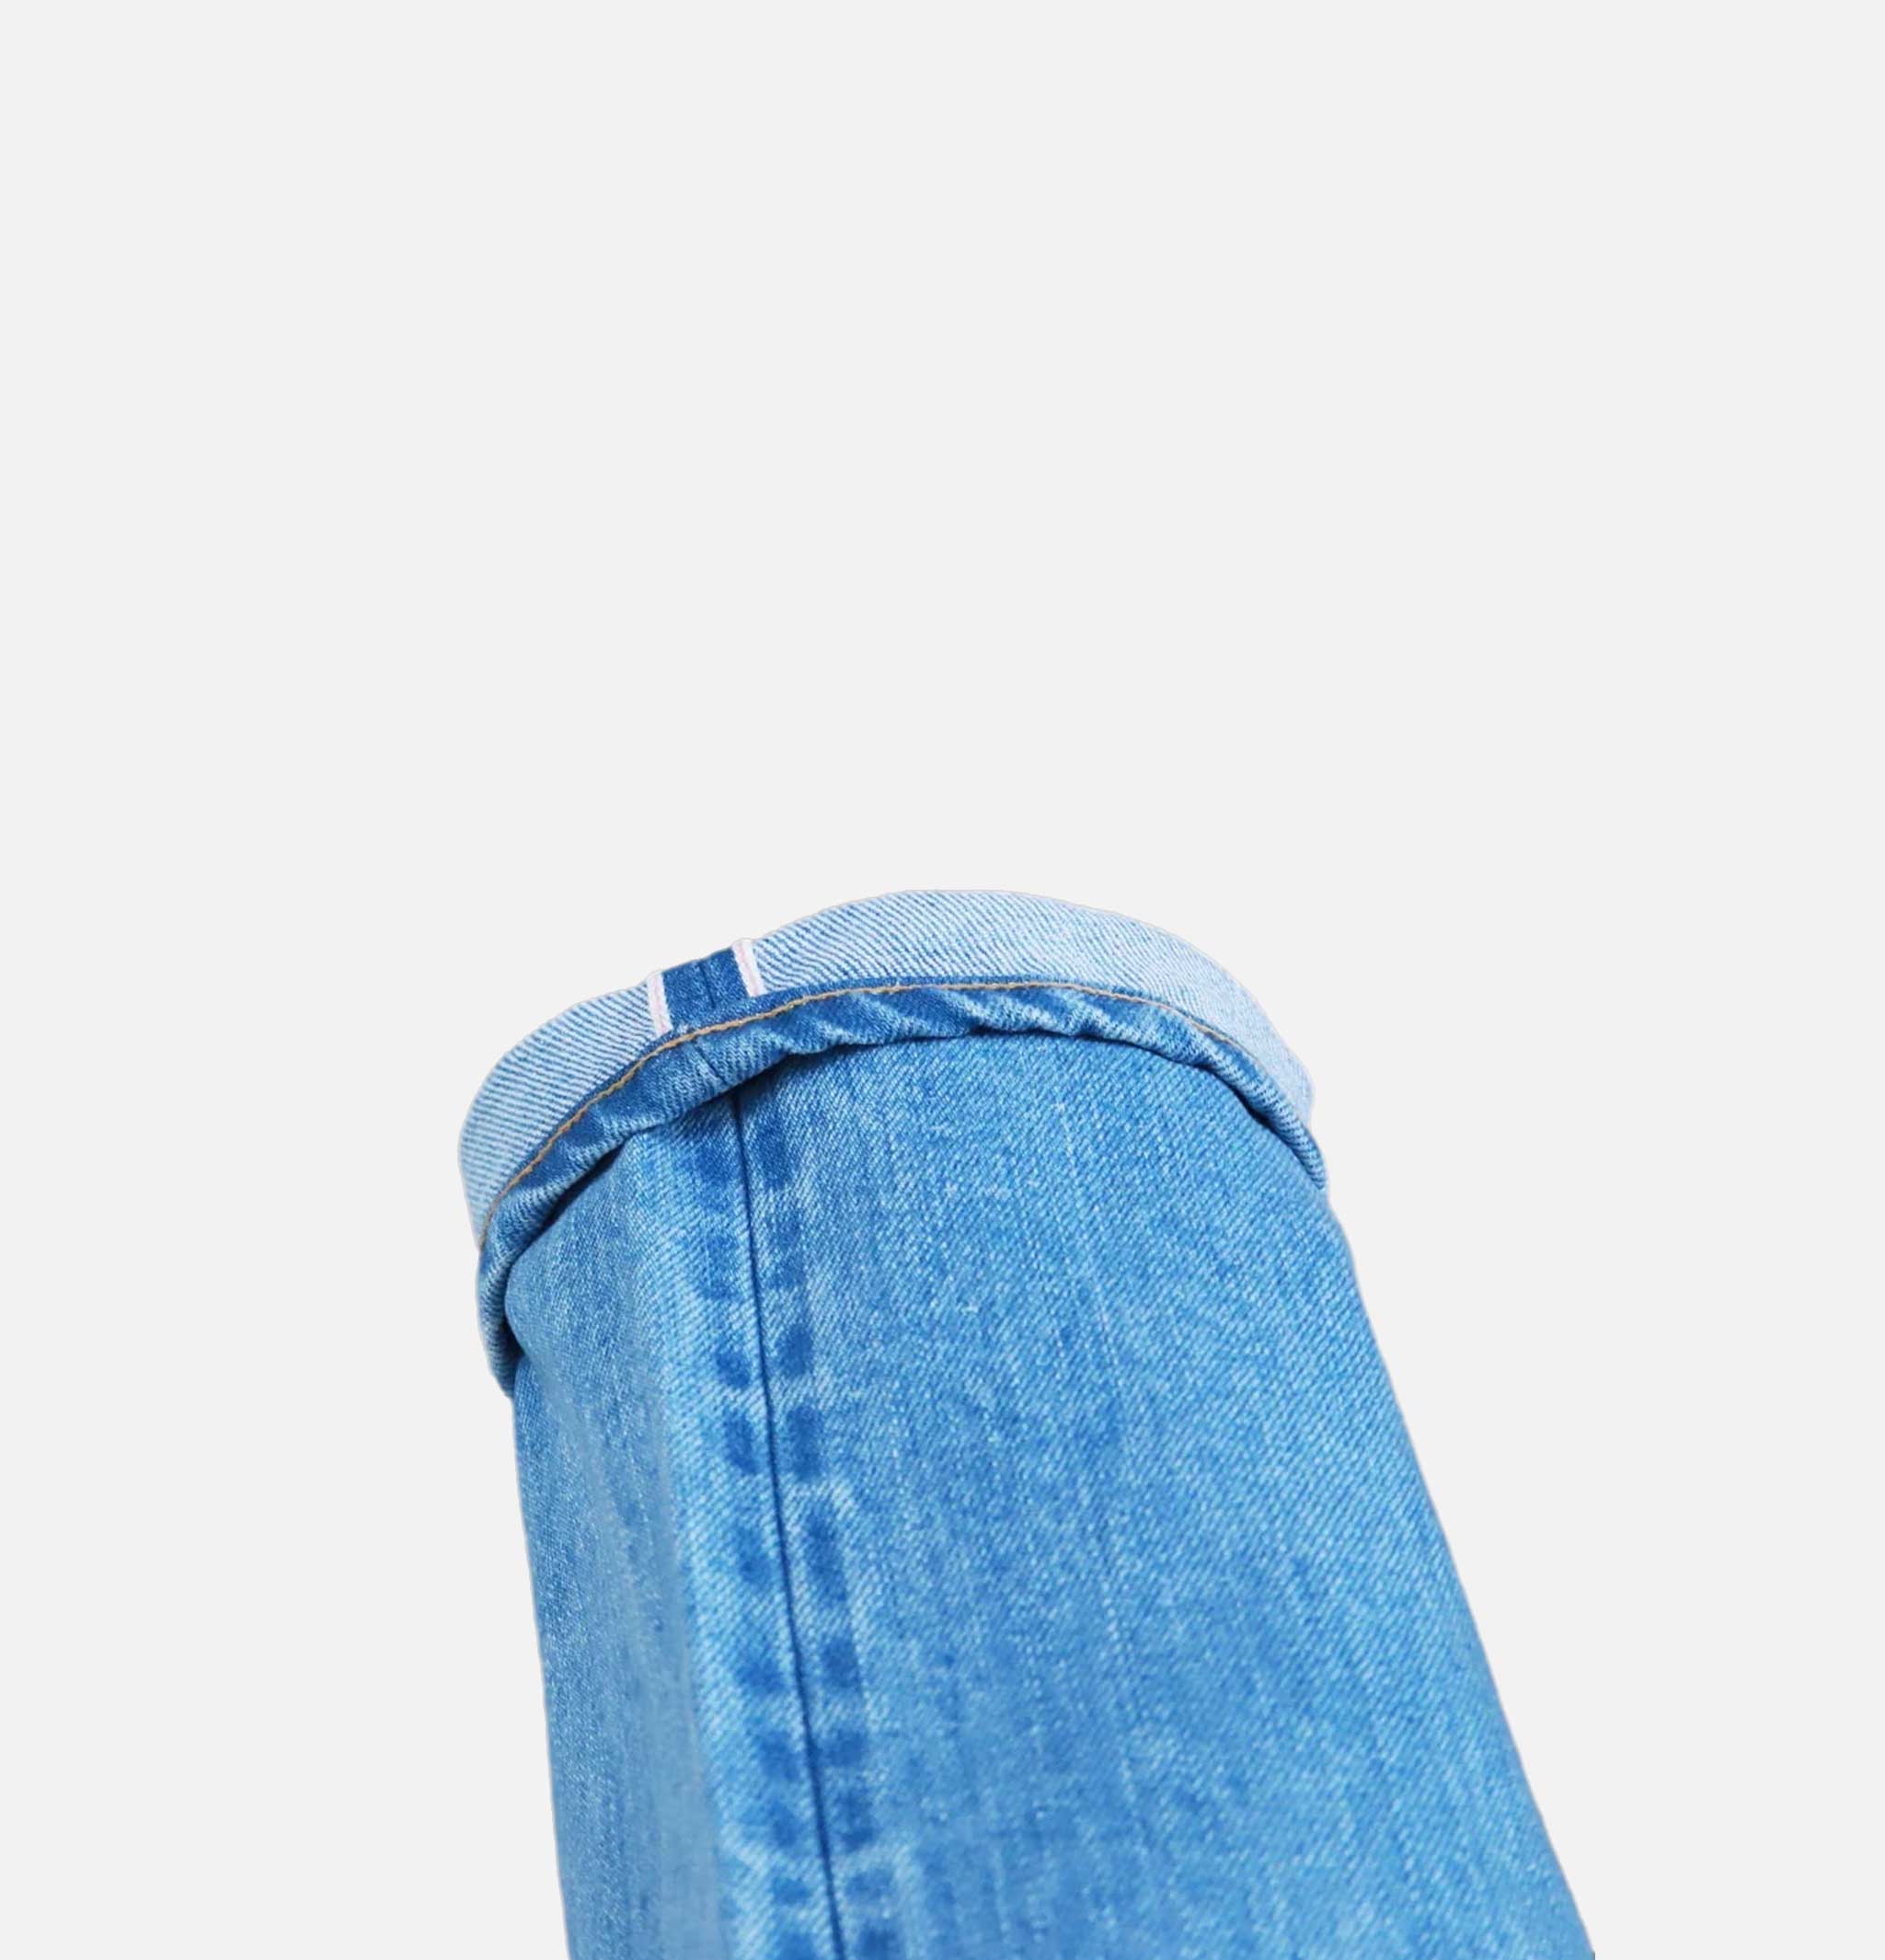 Hatski Jeans 22001 Loose Tapered